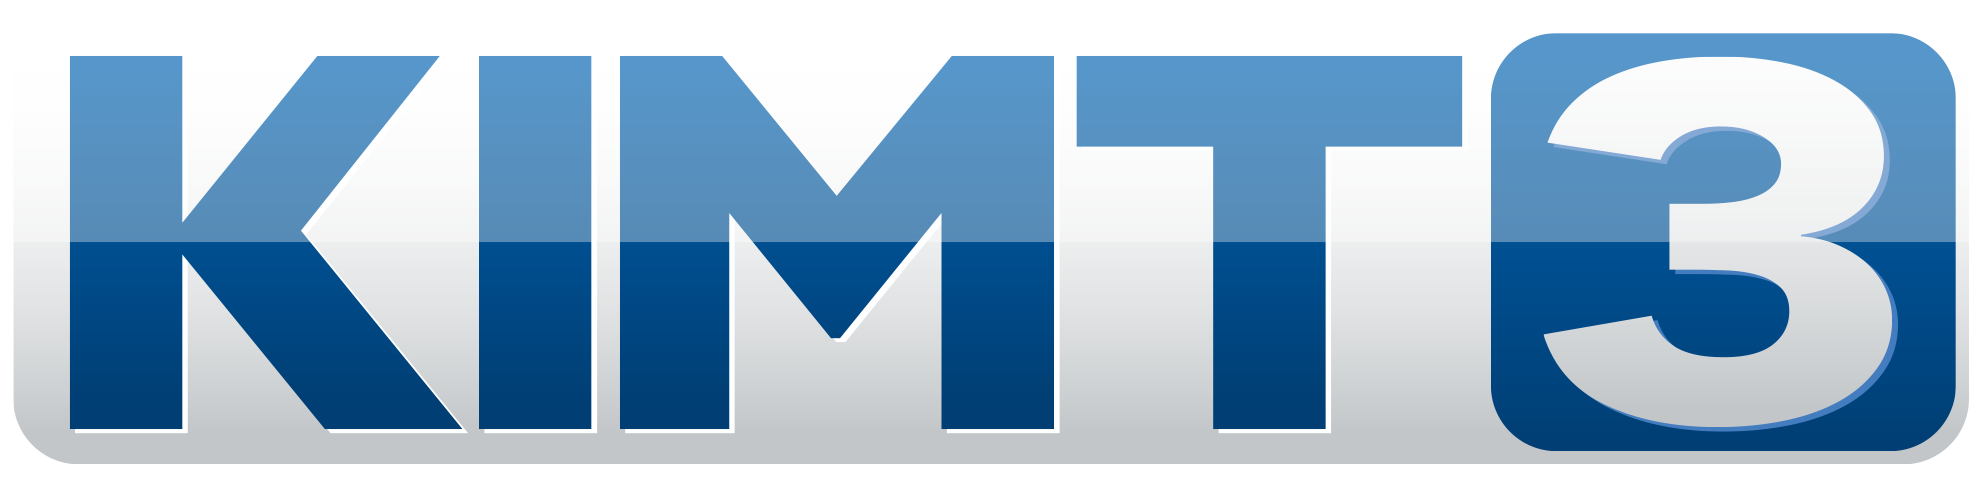 Logo of marketing sponsor, KIMT 3